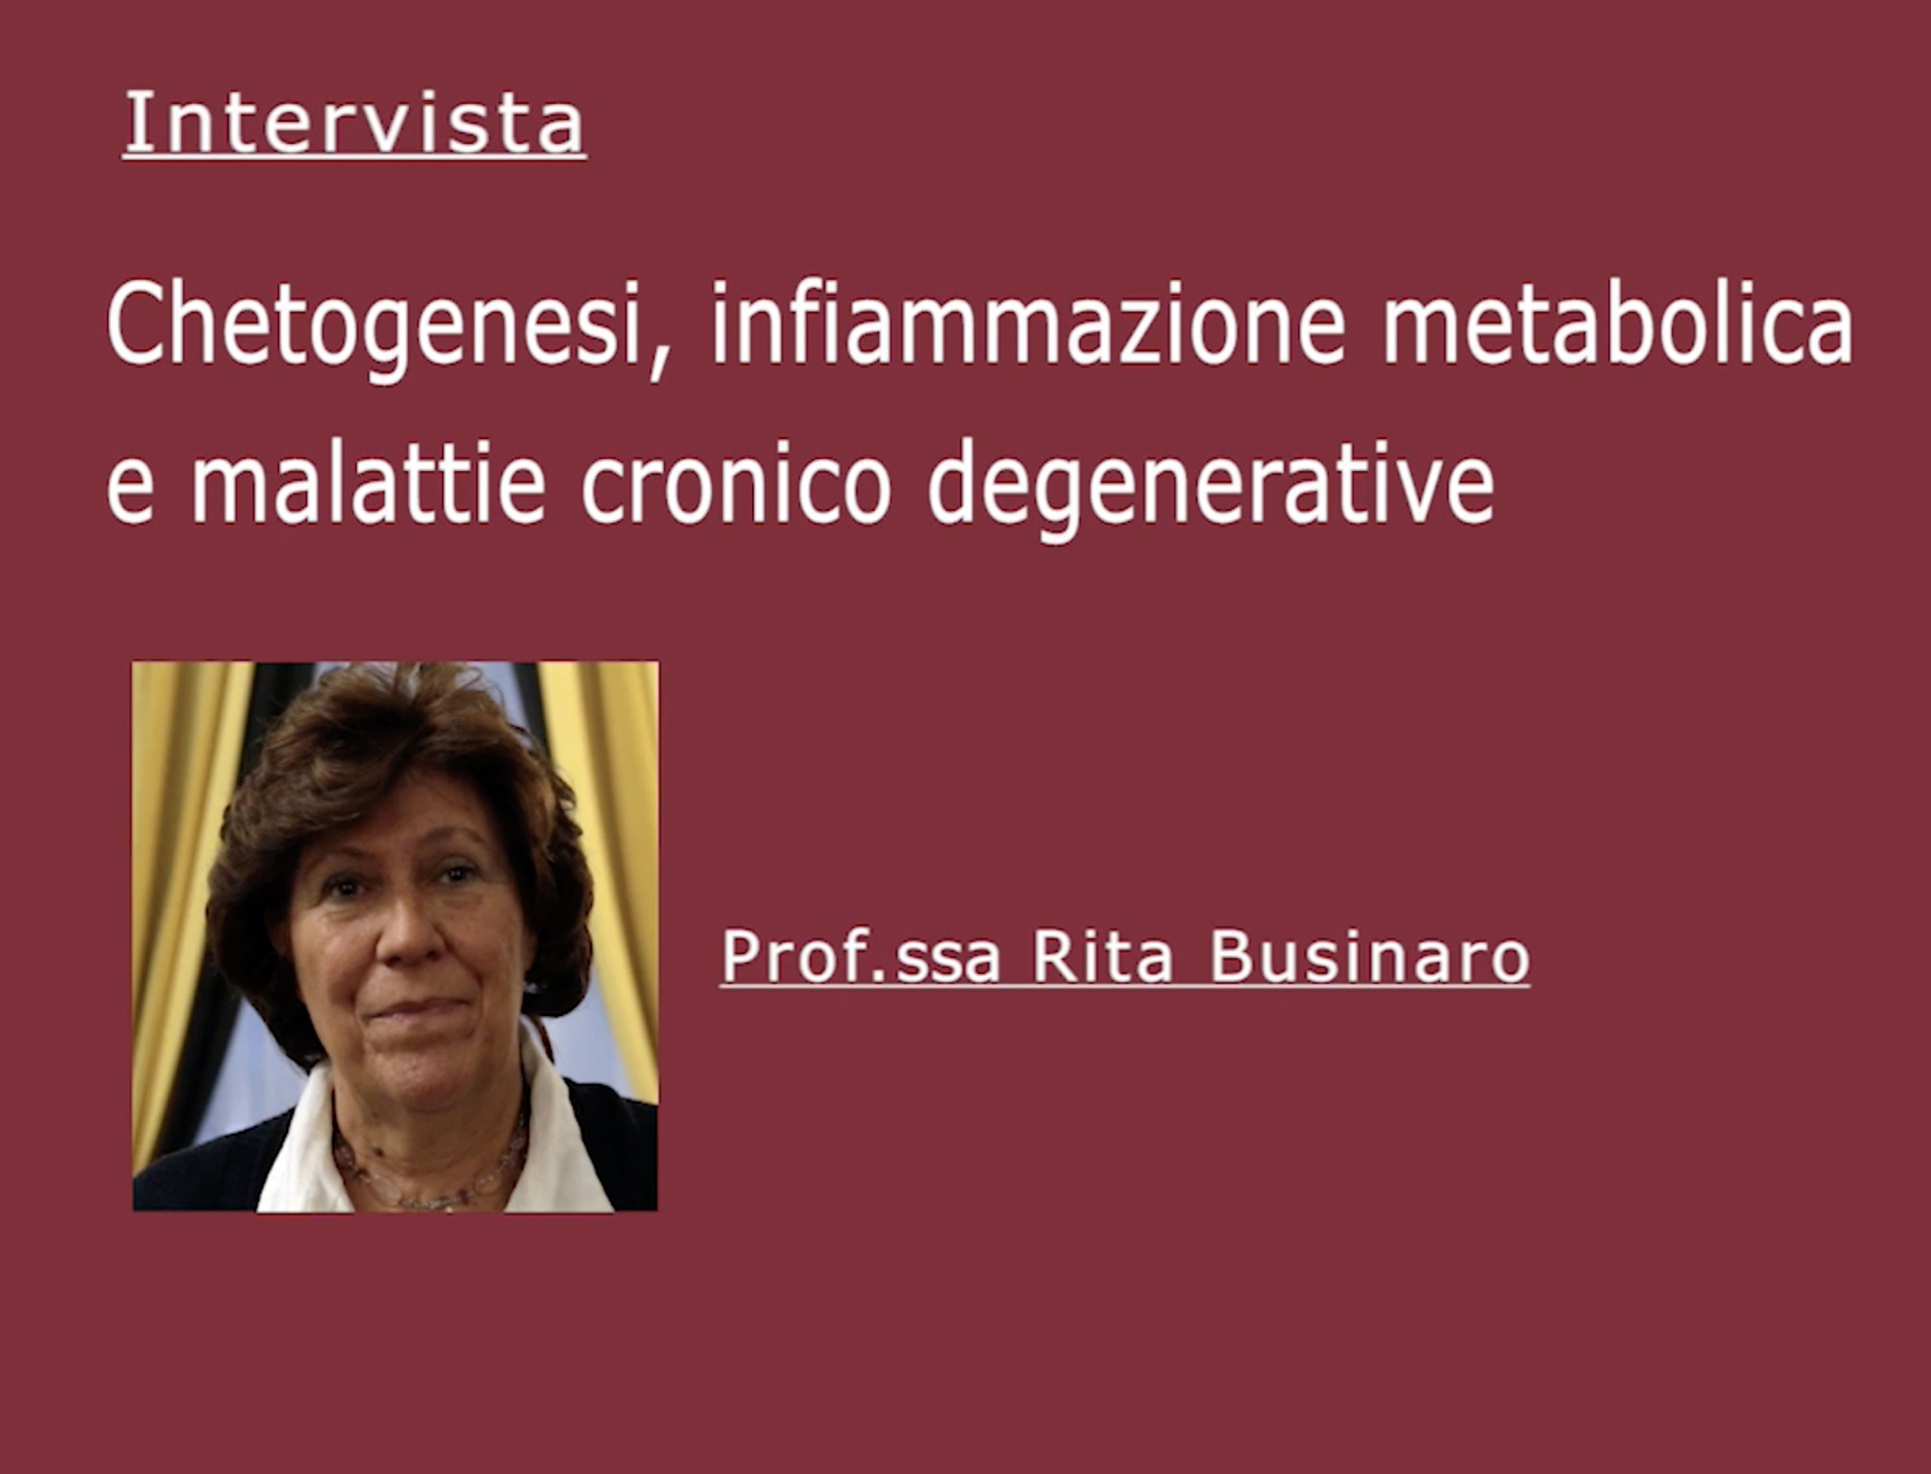 Prof.ssa Rita Businaro1